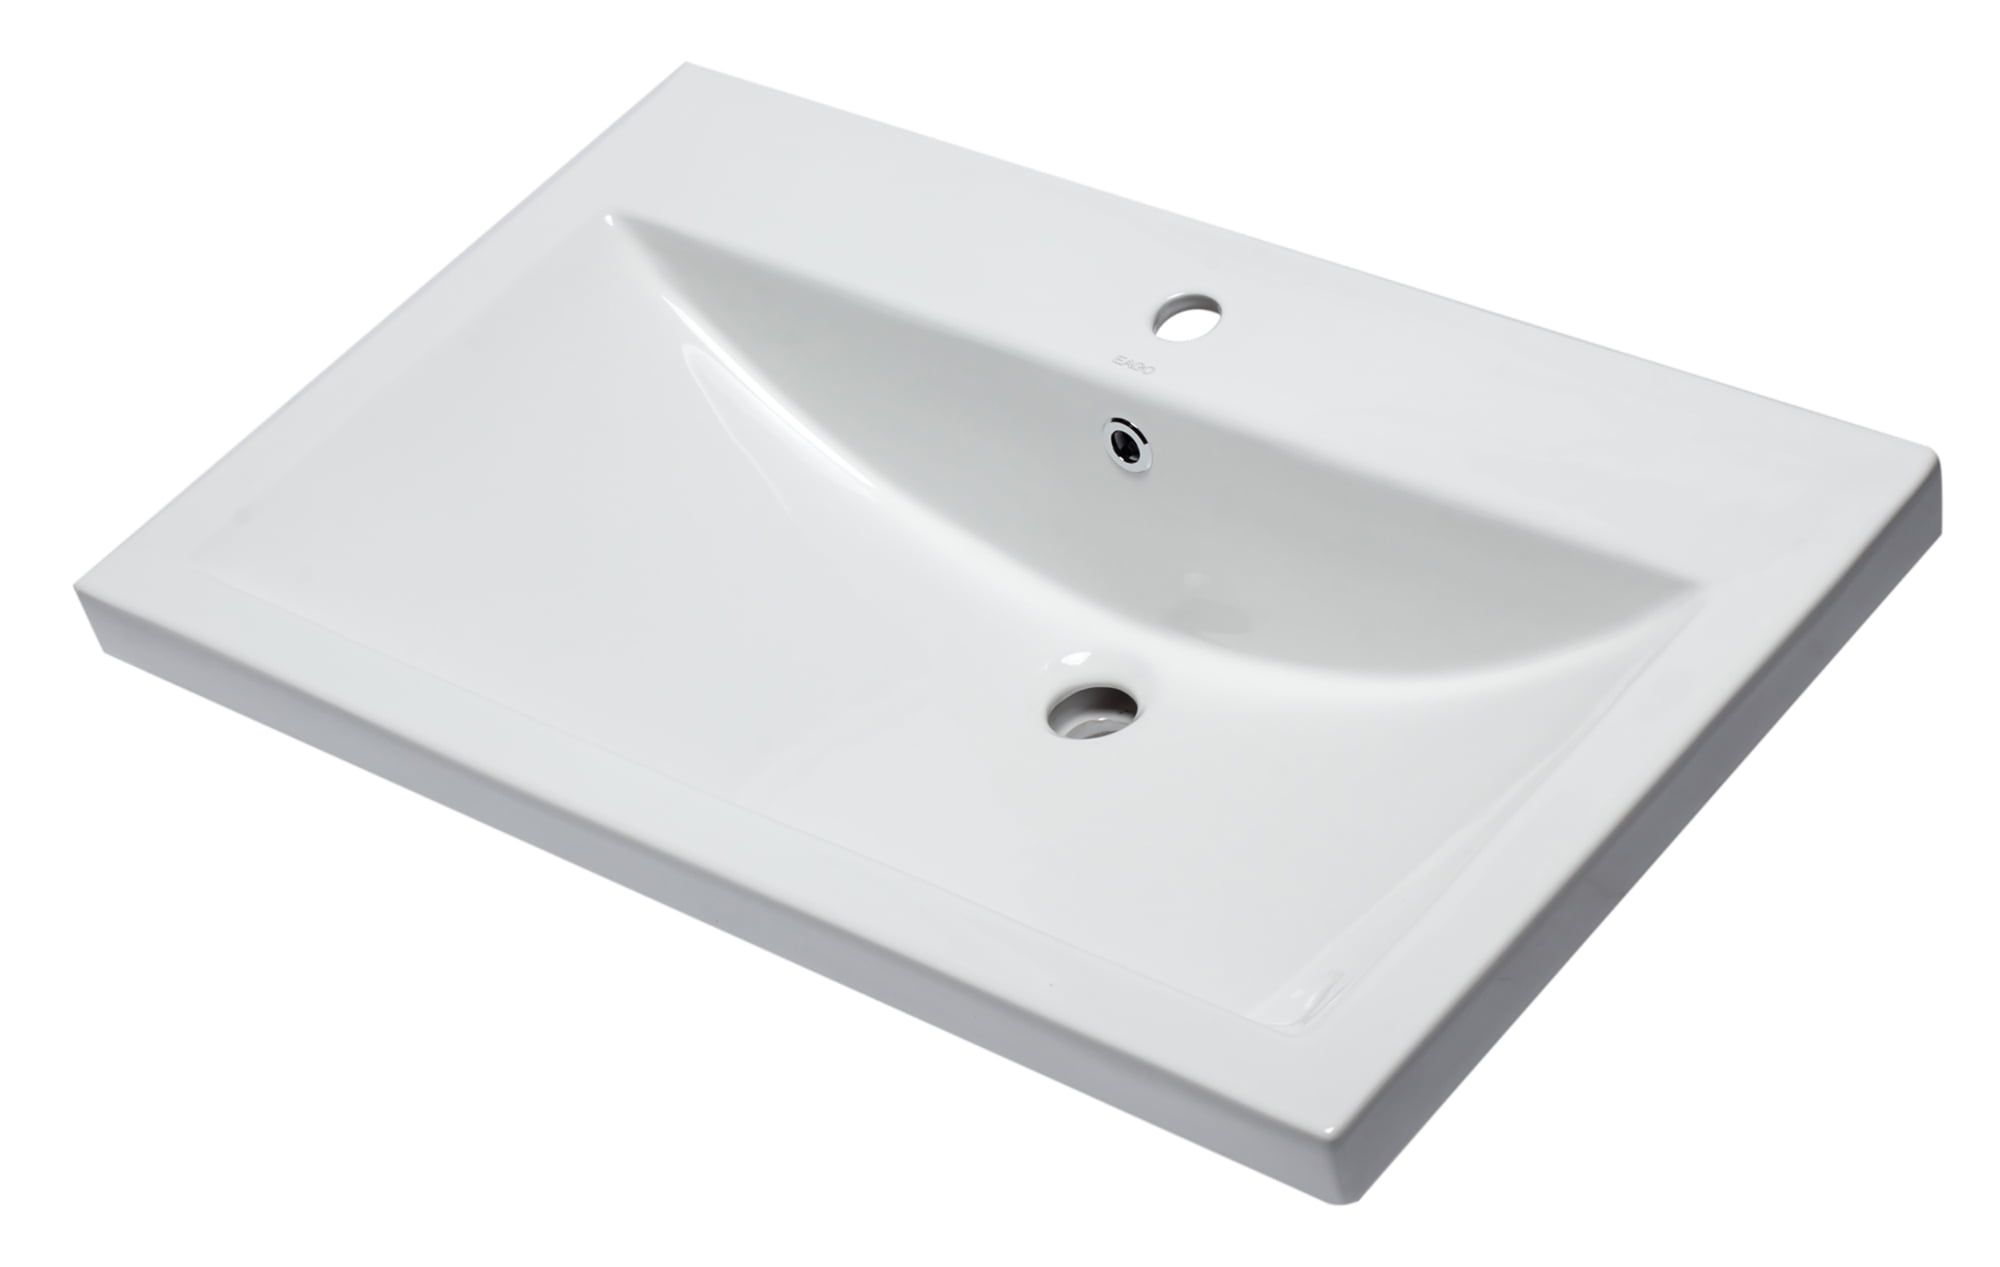 Bh001 White Ceramic 32 X 19 In. Rectangular Drop In Sink